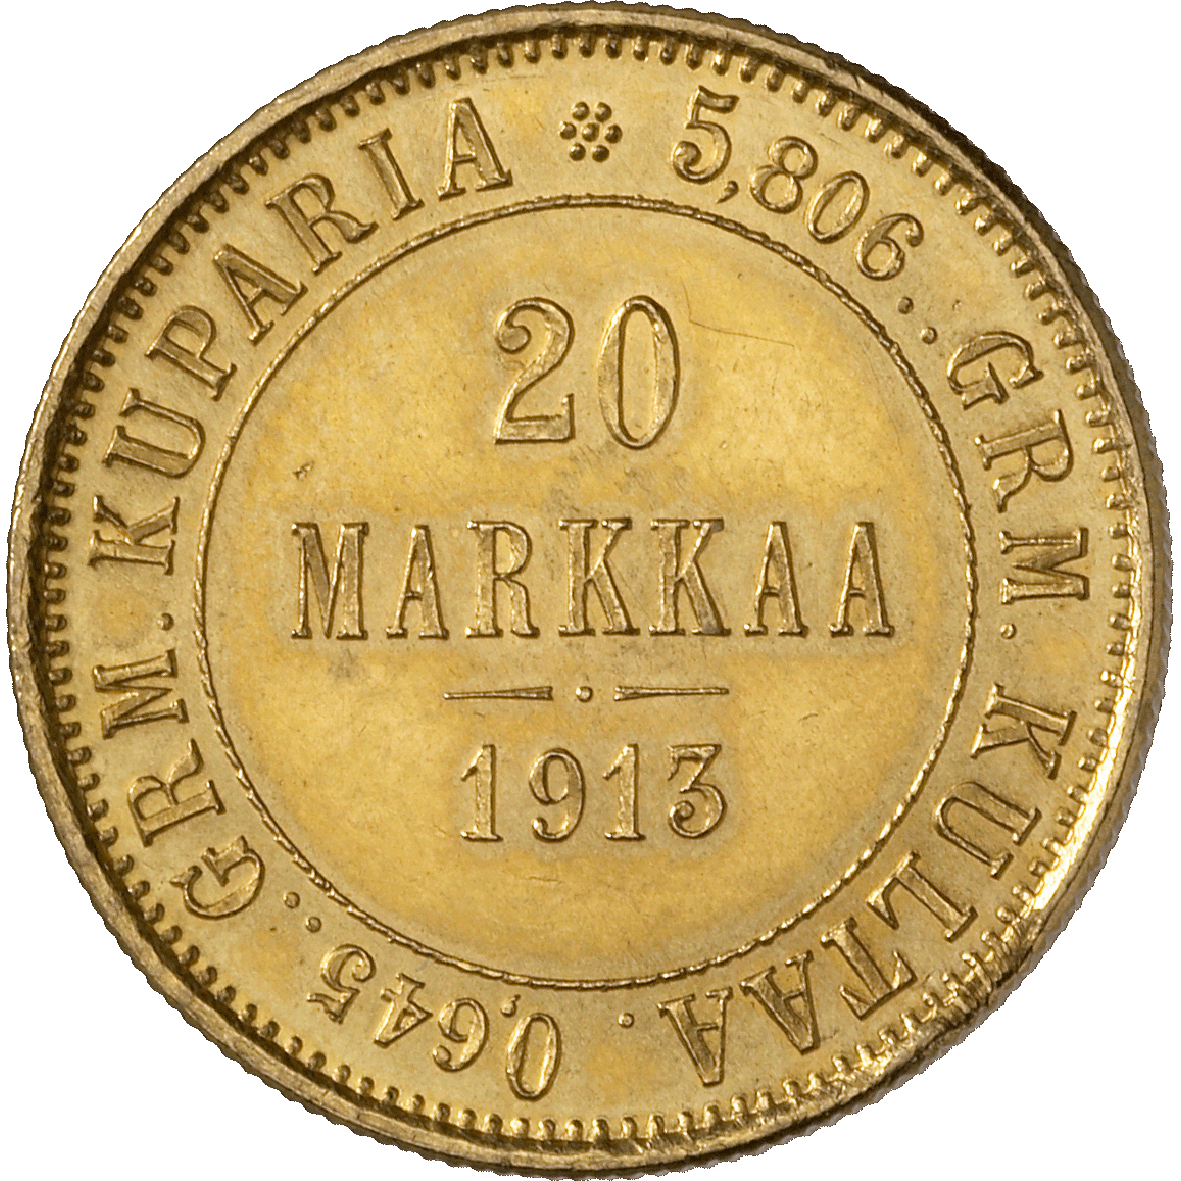 Grand Duchy of Finland, Nicolas II of Russia, 20 Markkaa 1913 (reverse)